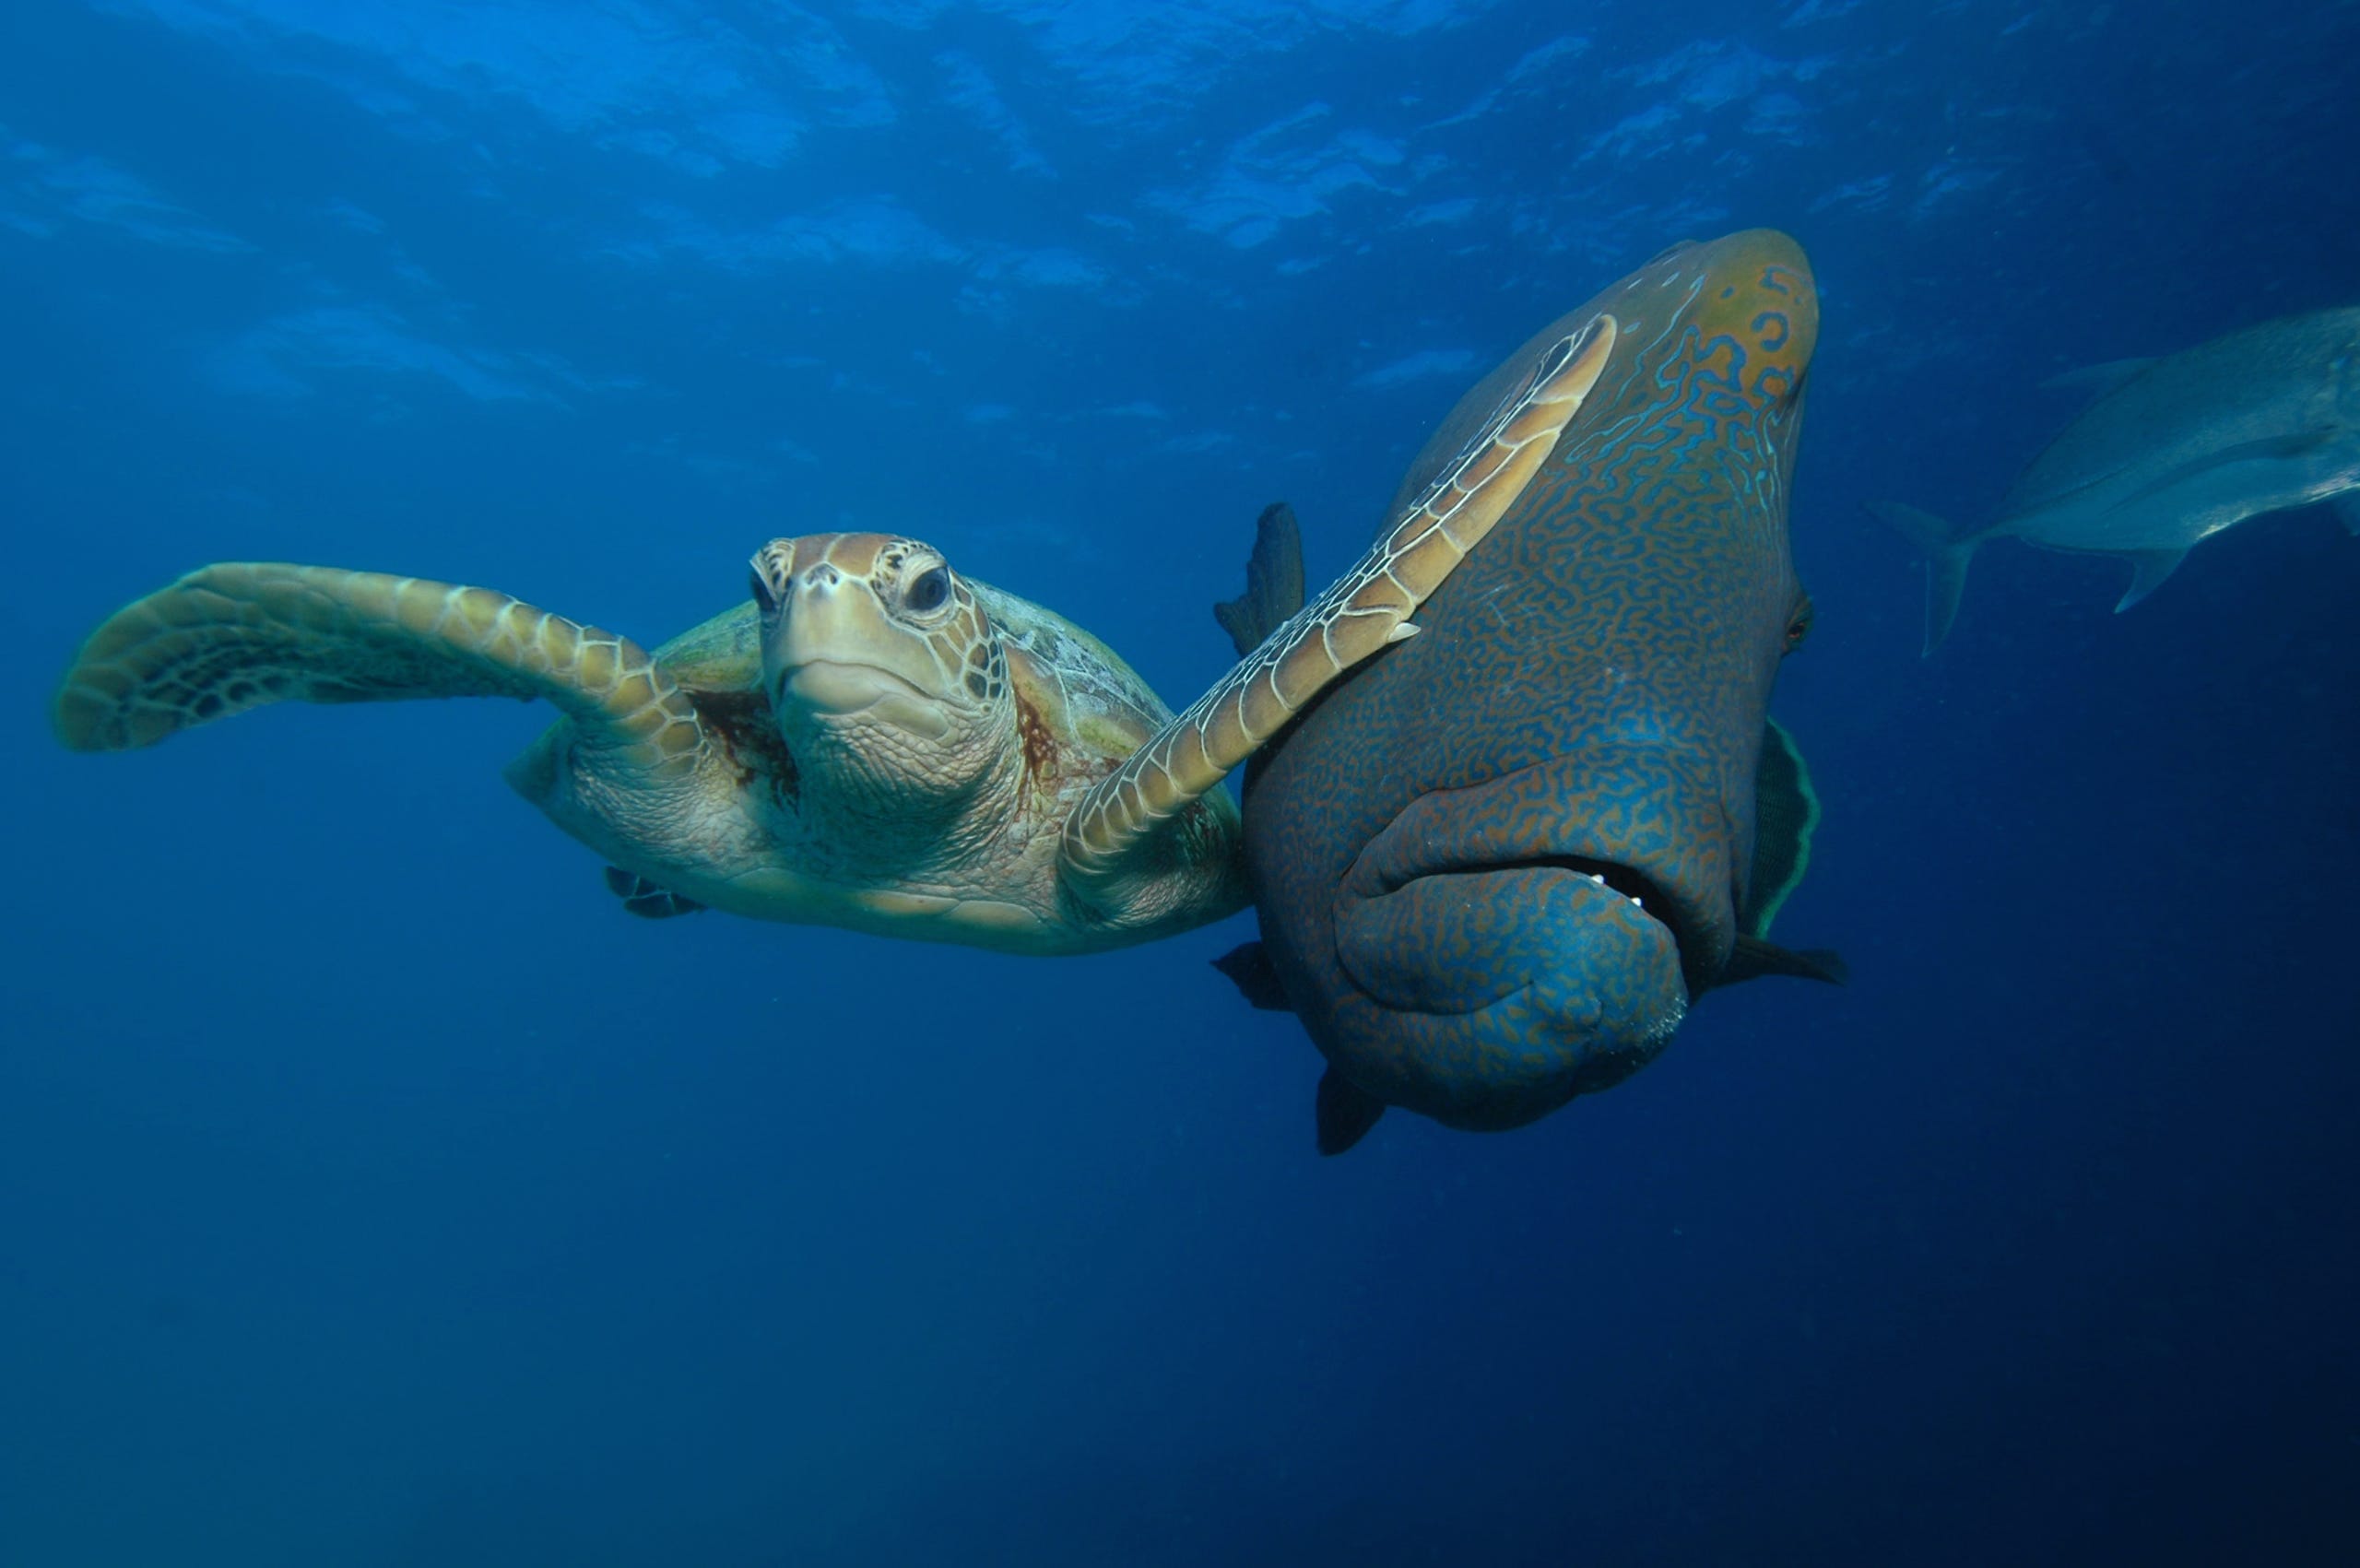 A turtle slaps a fish.